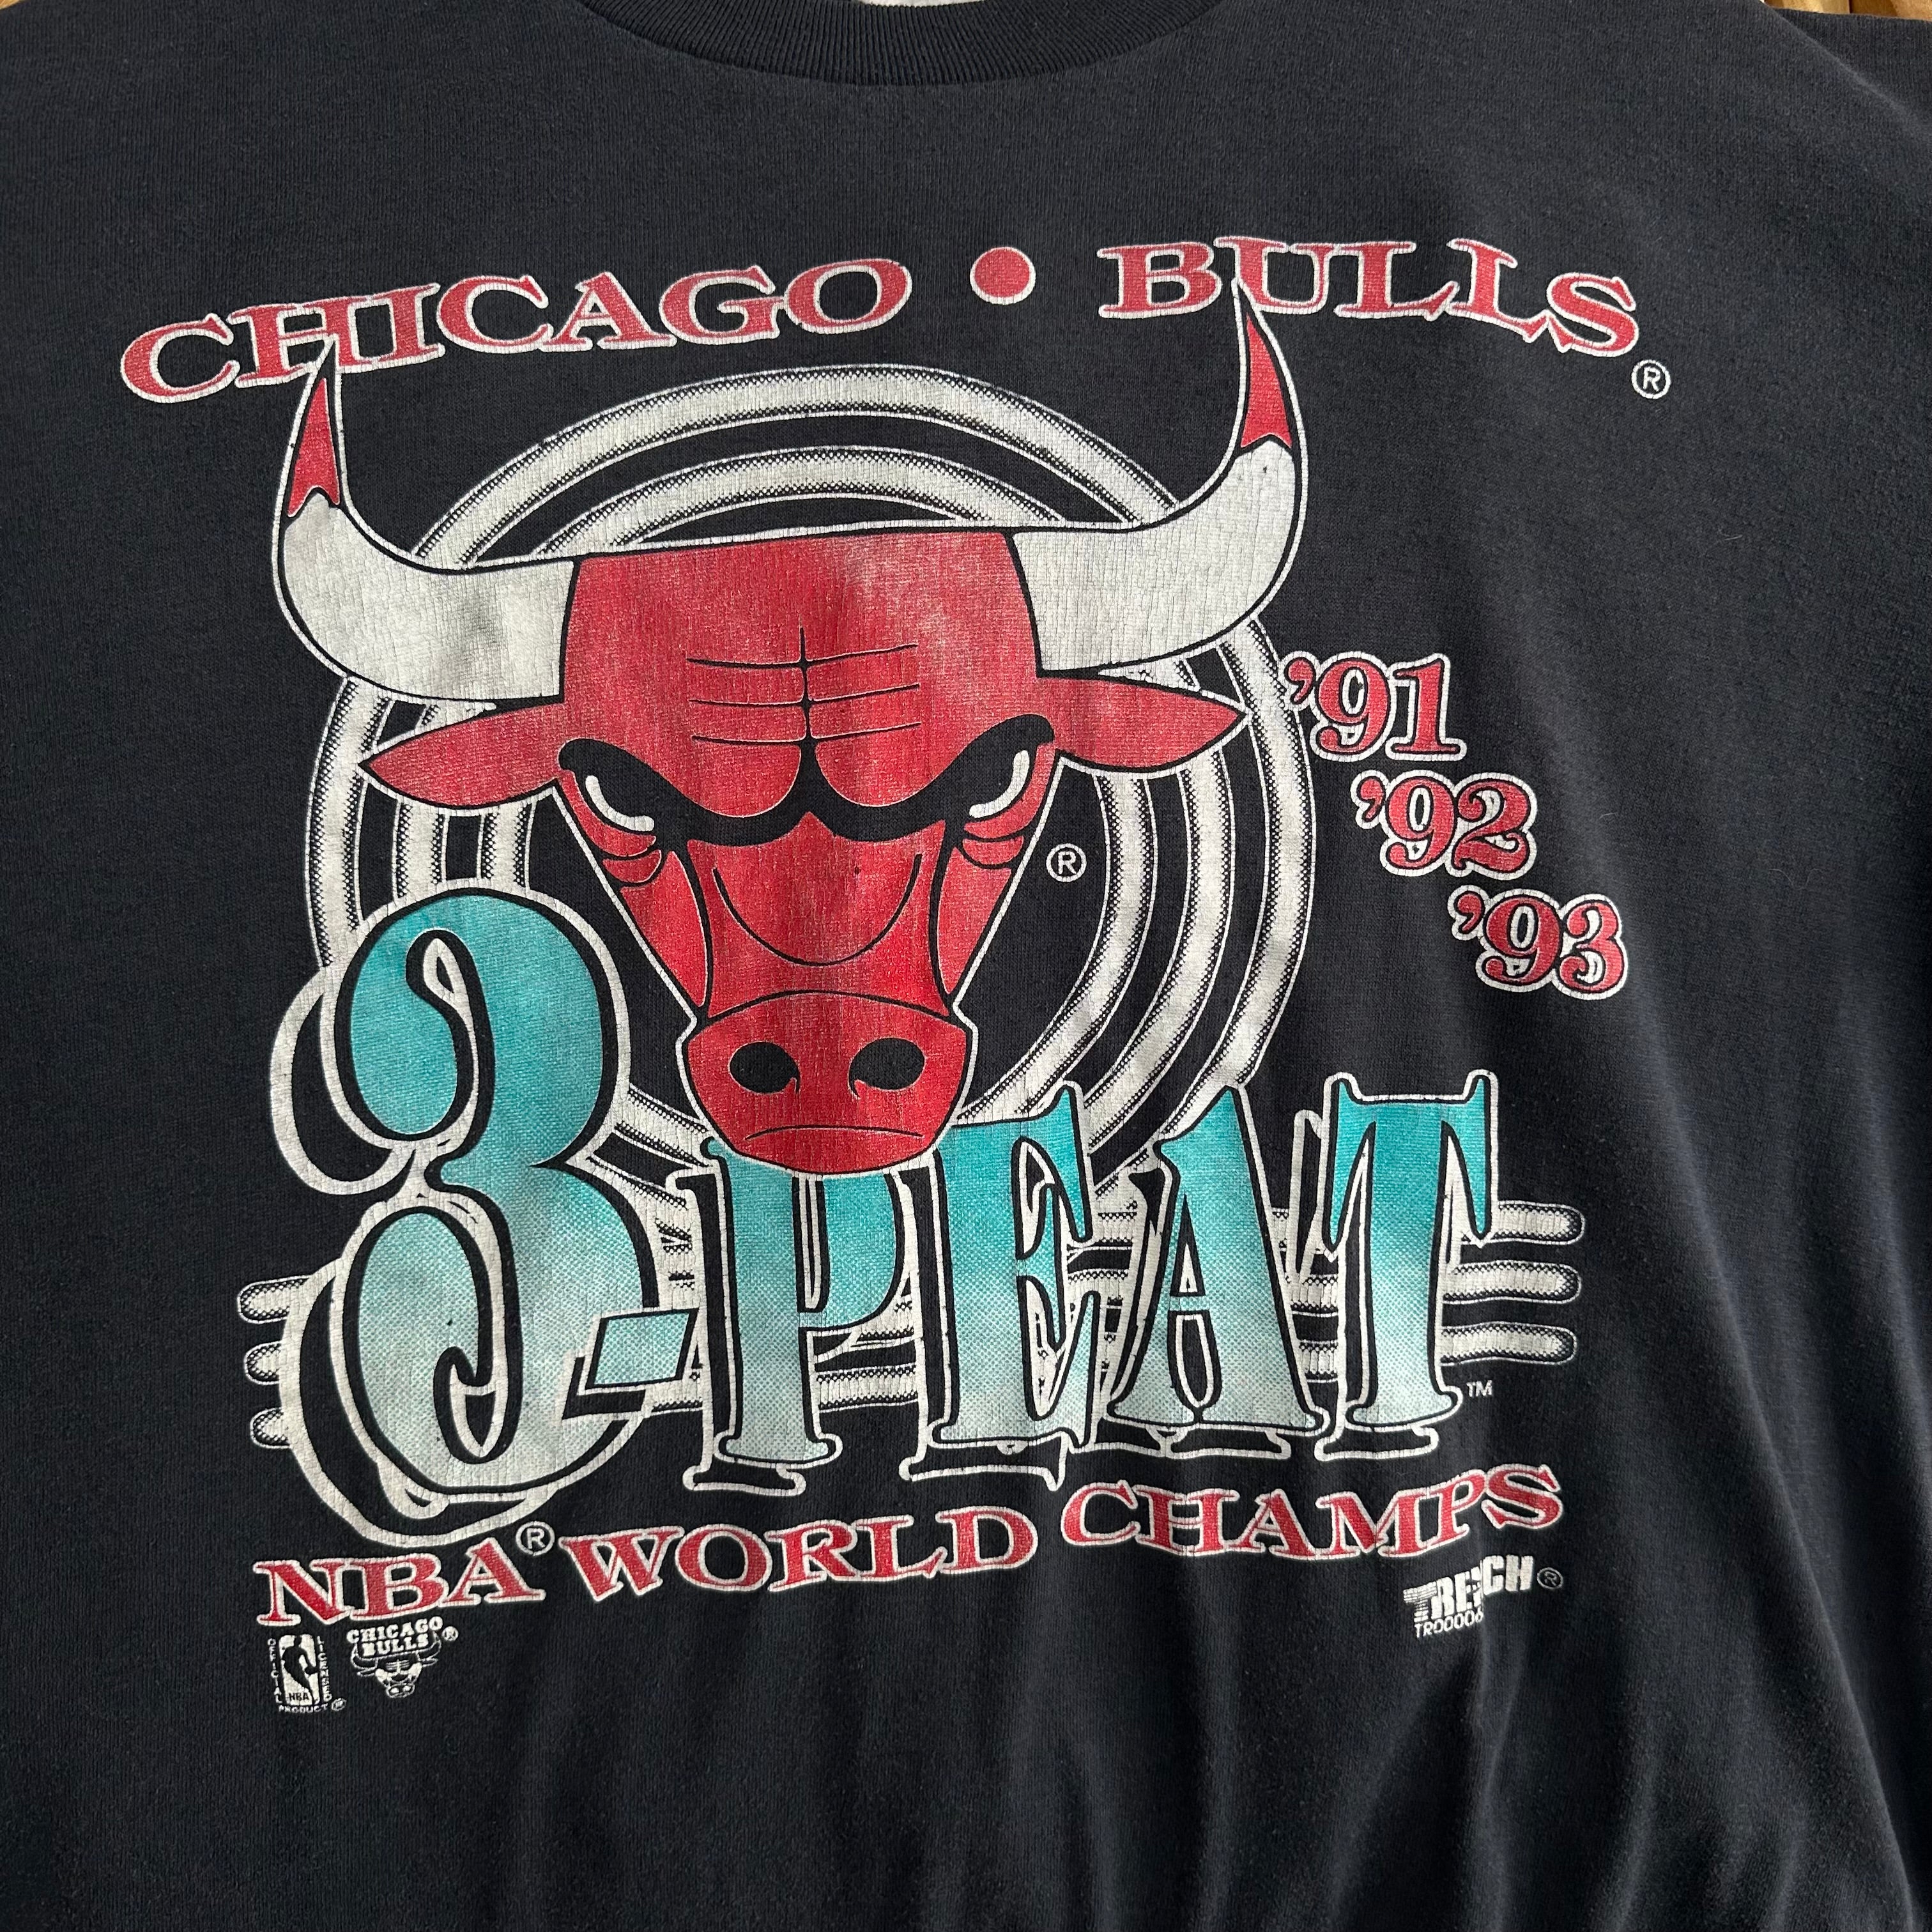 Chicago Bulls 3-Peat ‘91, ‘92, ‘93 T-Shirt